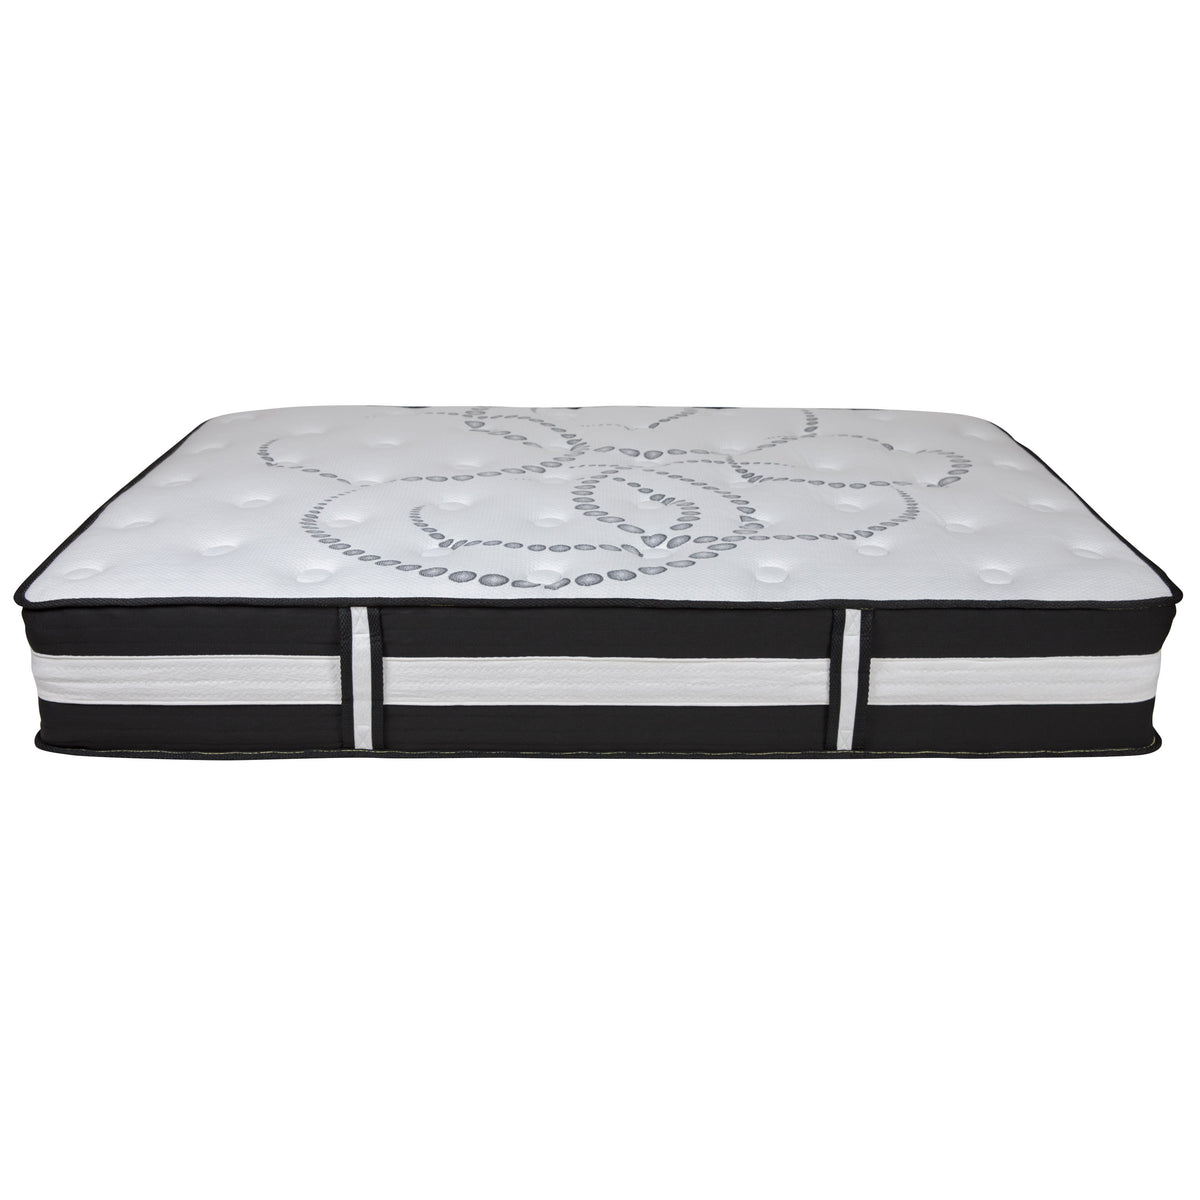 Full |#| 14inch Full Platform Bed Frame; 12inch Pocket Spring Mattress & 2inch Memory Foam Topper